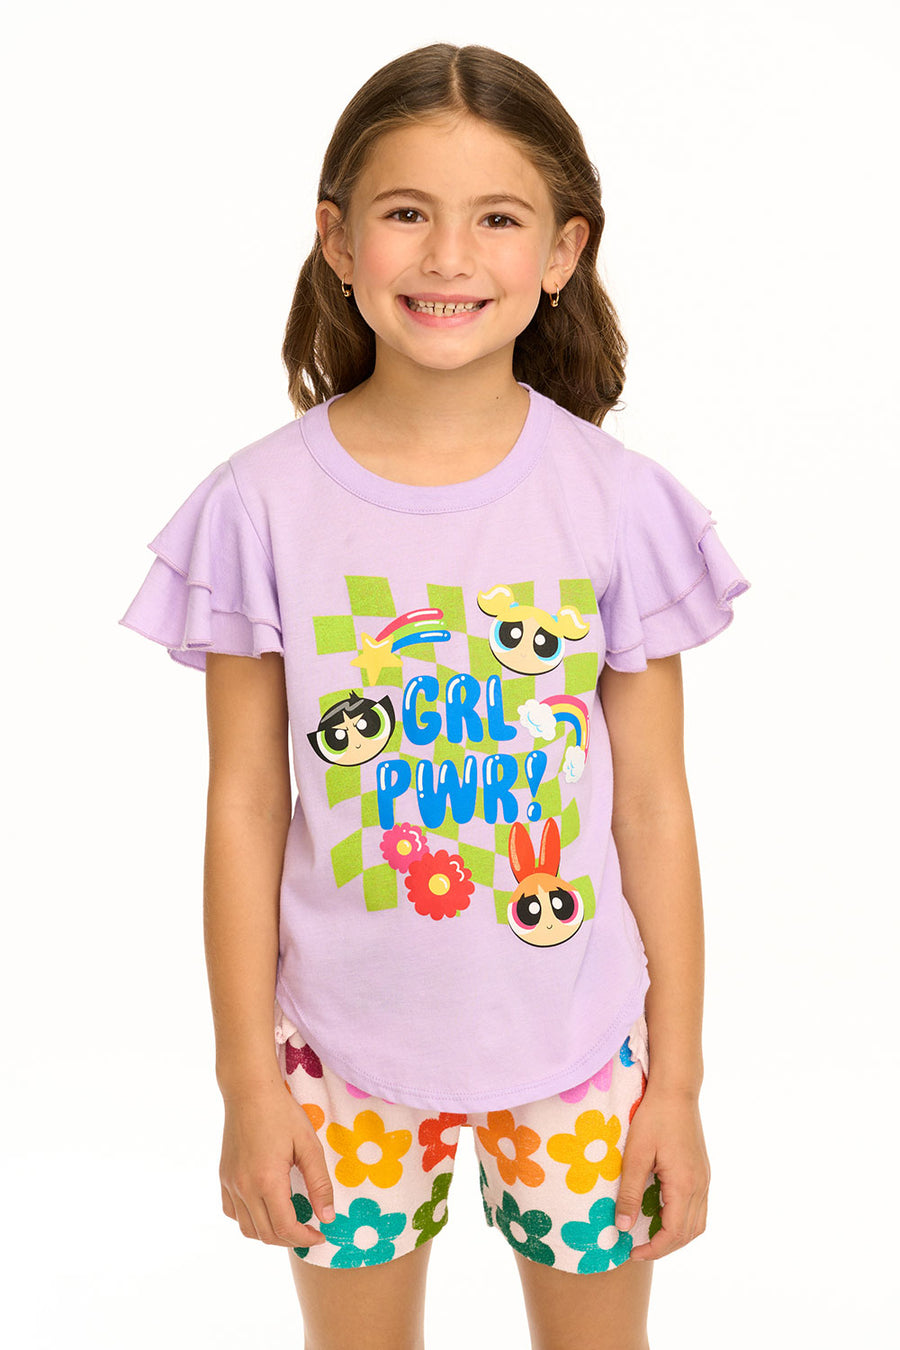 Powderpuff Girls - Girl Power Flutter Sleeve Tee GIRLS chaserbrand